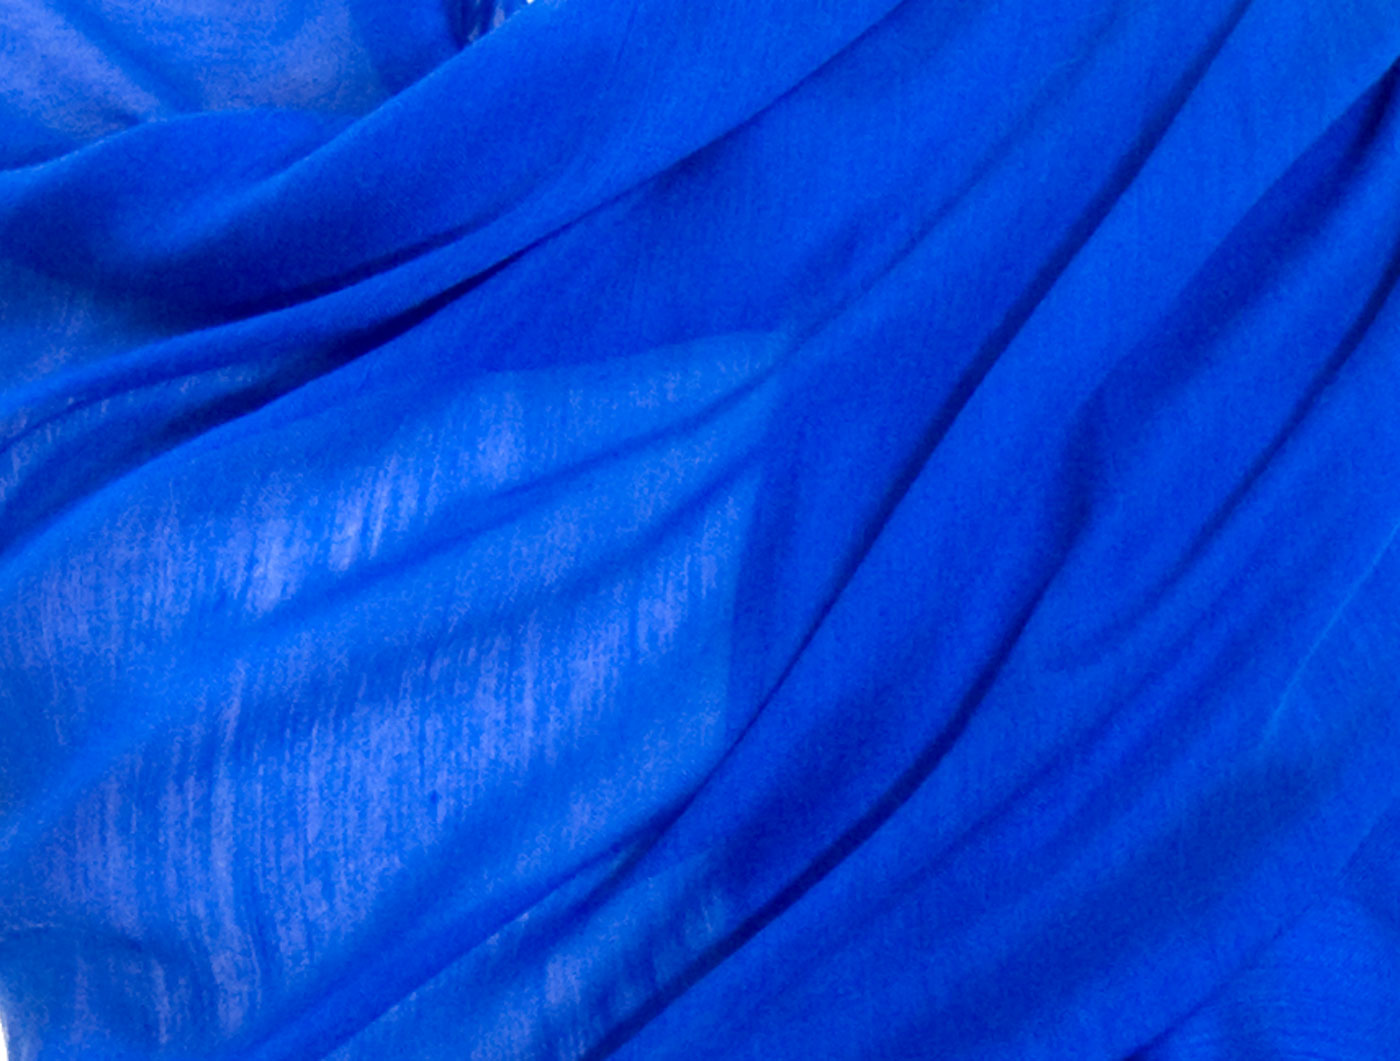 étole foulard bleu vif soie fine Alex 2